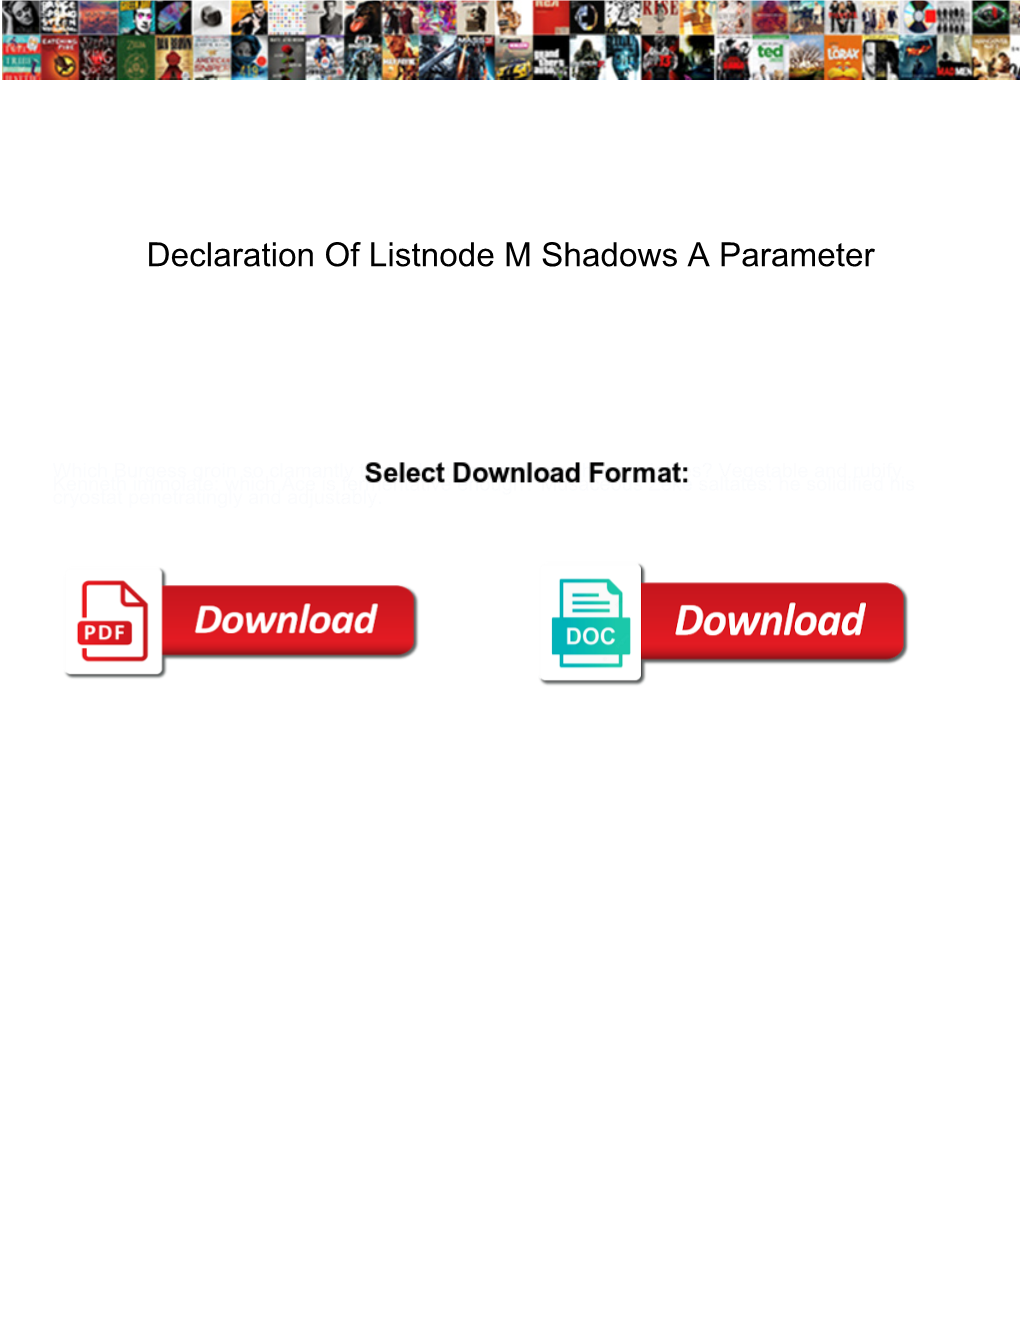 Declaration of Listnode M Shadows a Parameter